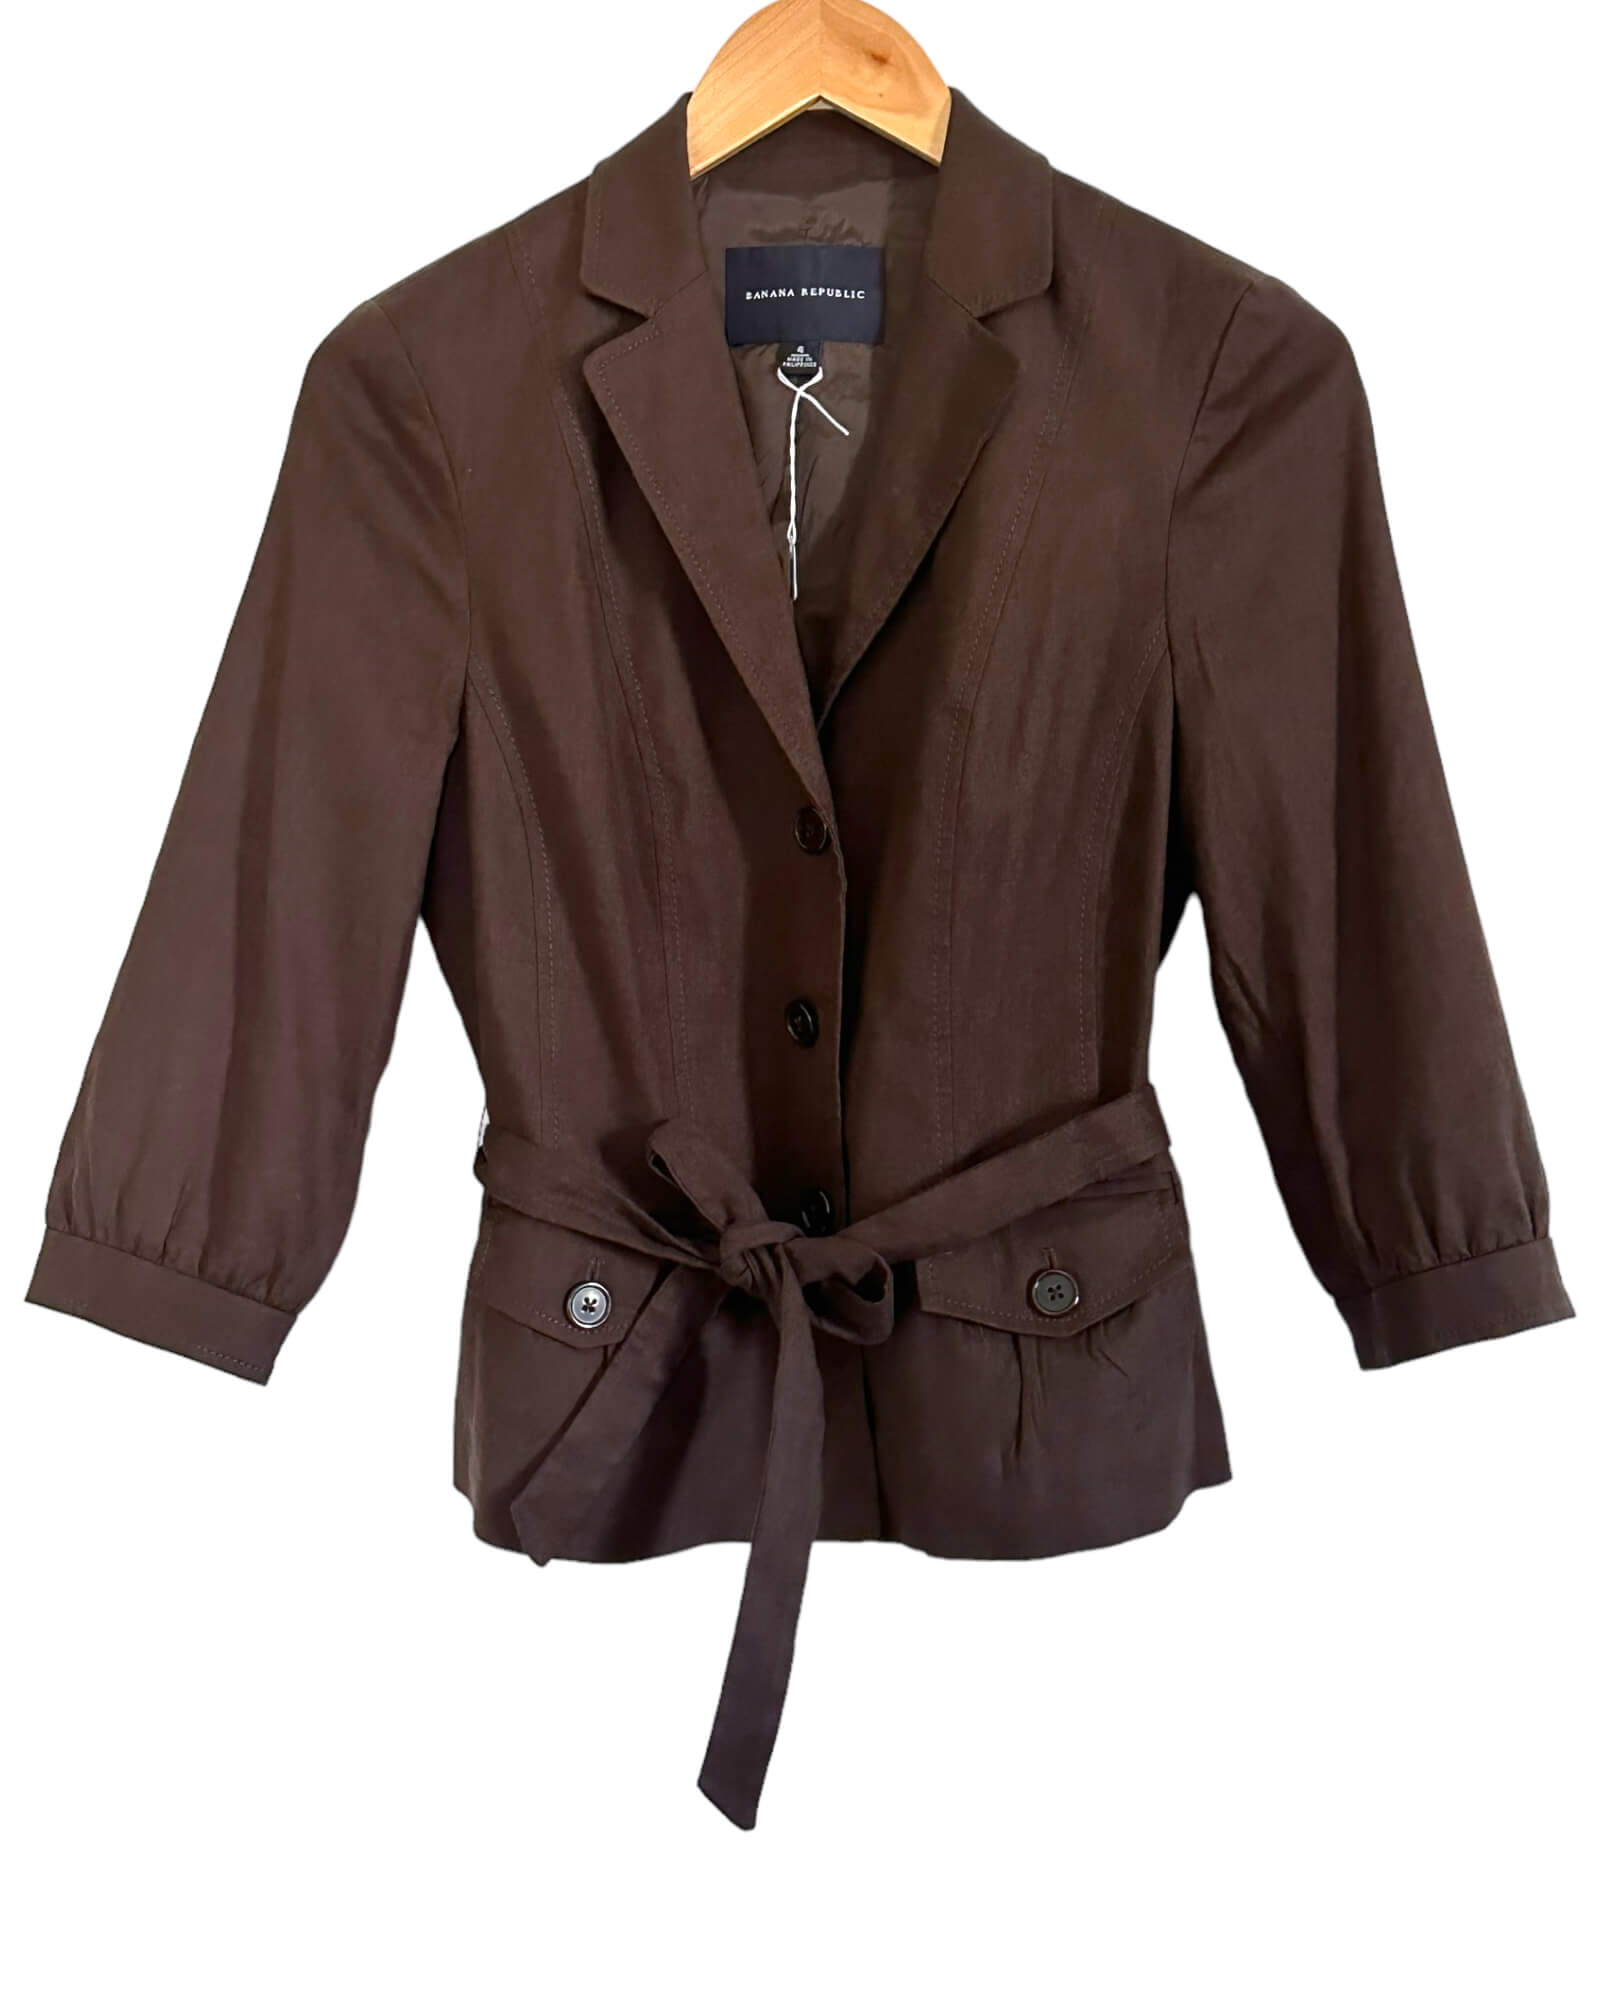 Cool Winter BANANA REPUBLIC brown belted linen jacket